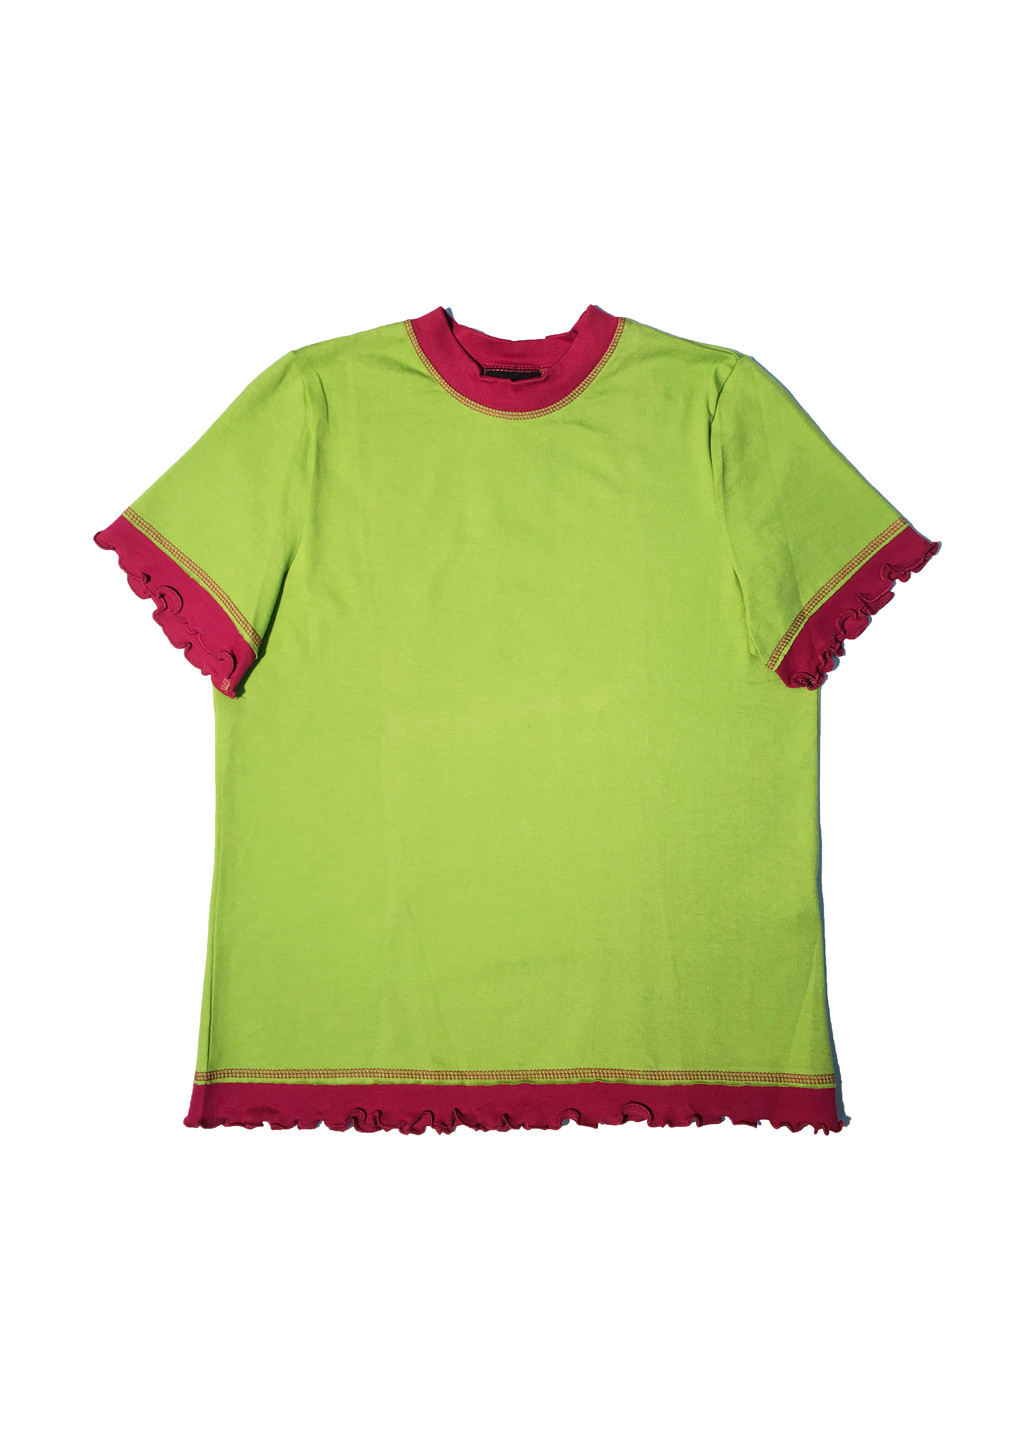 Салатовая летняя футболка Piccolo L